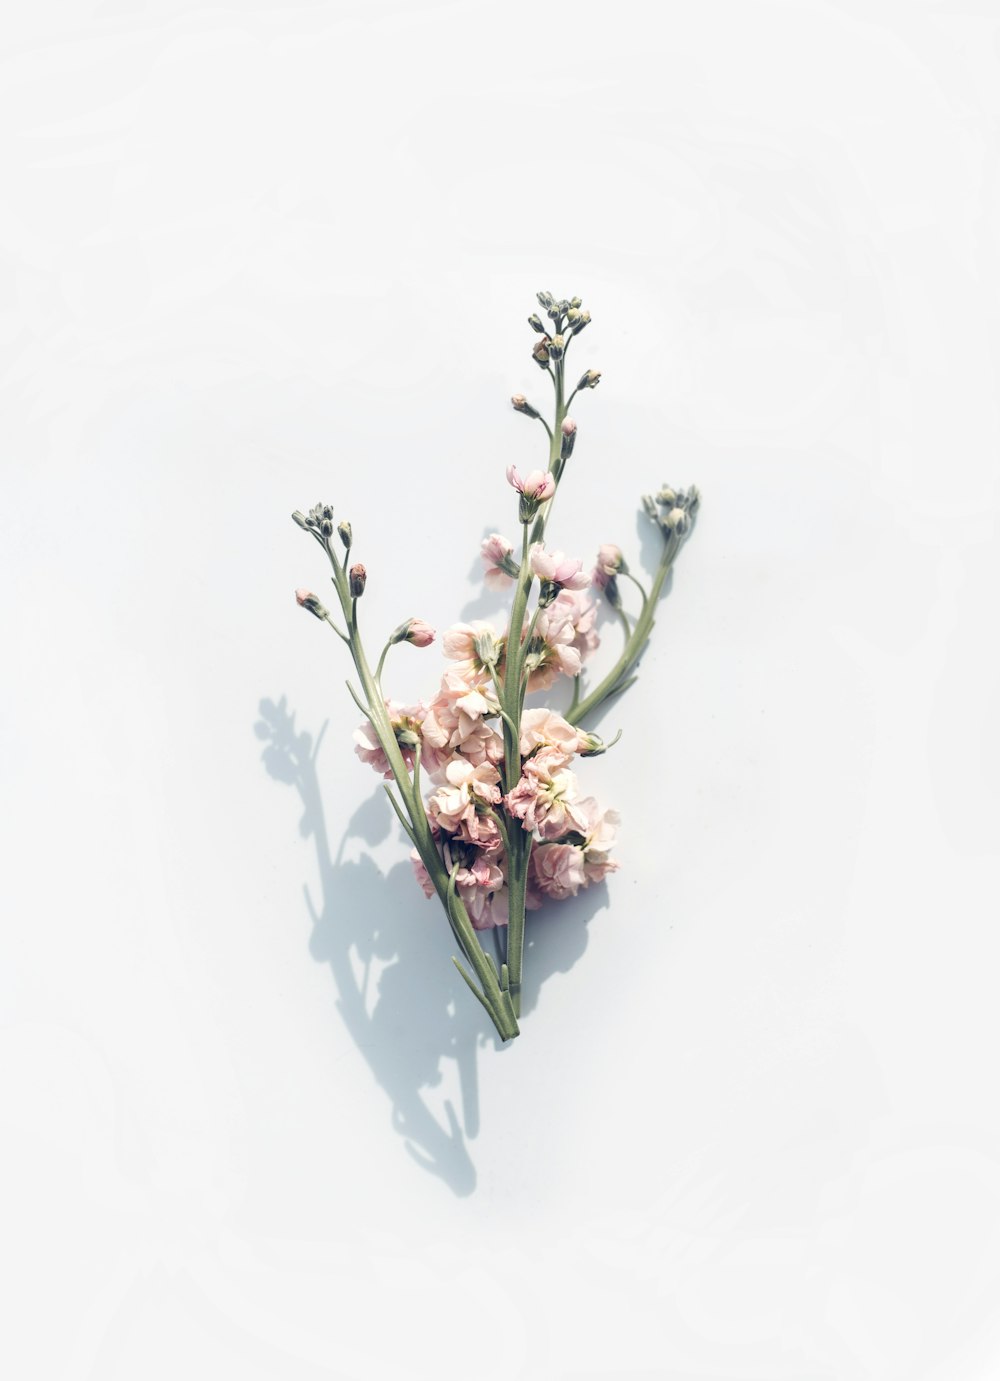 pink flower on white surface photo – Free Flower Image on Unsplash